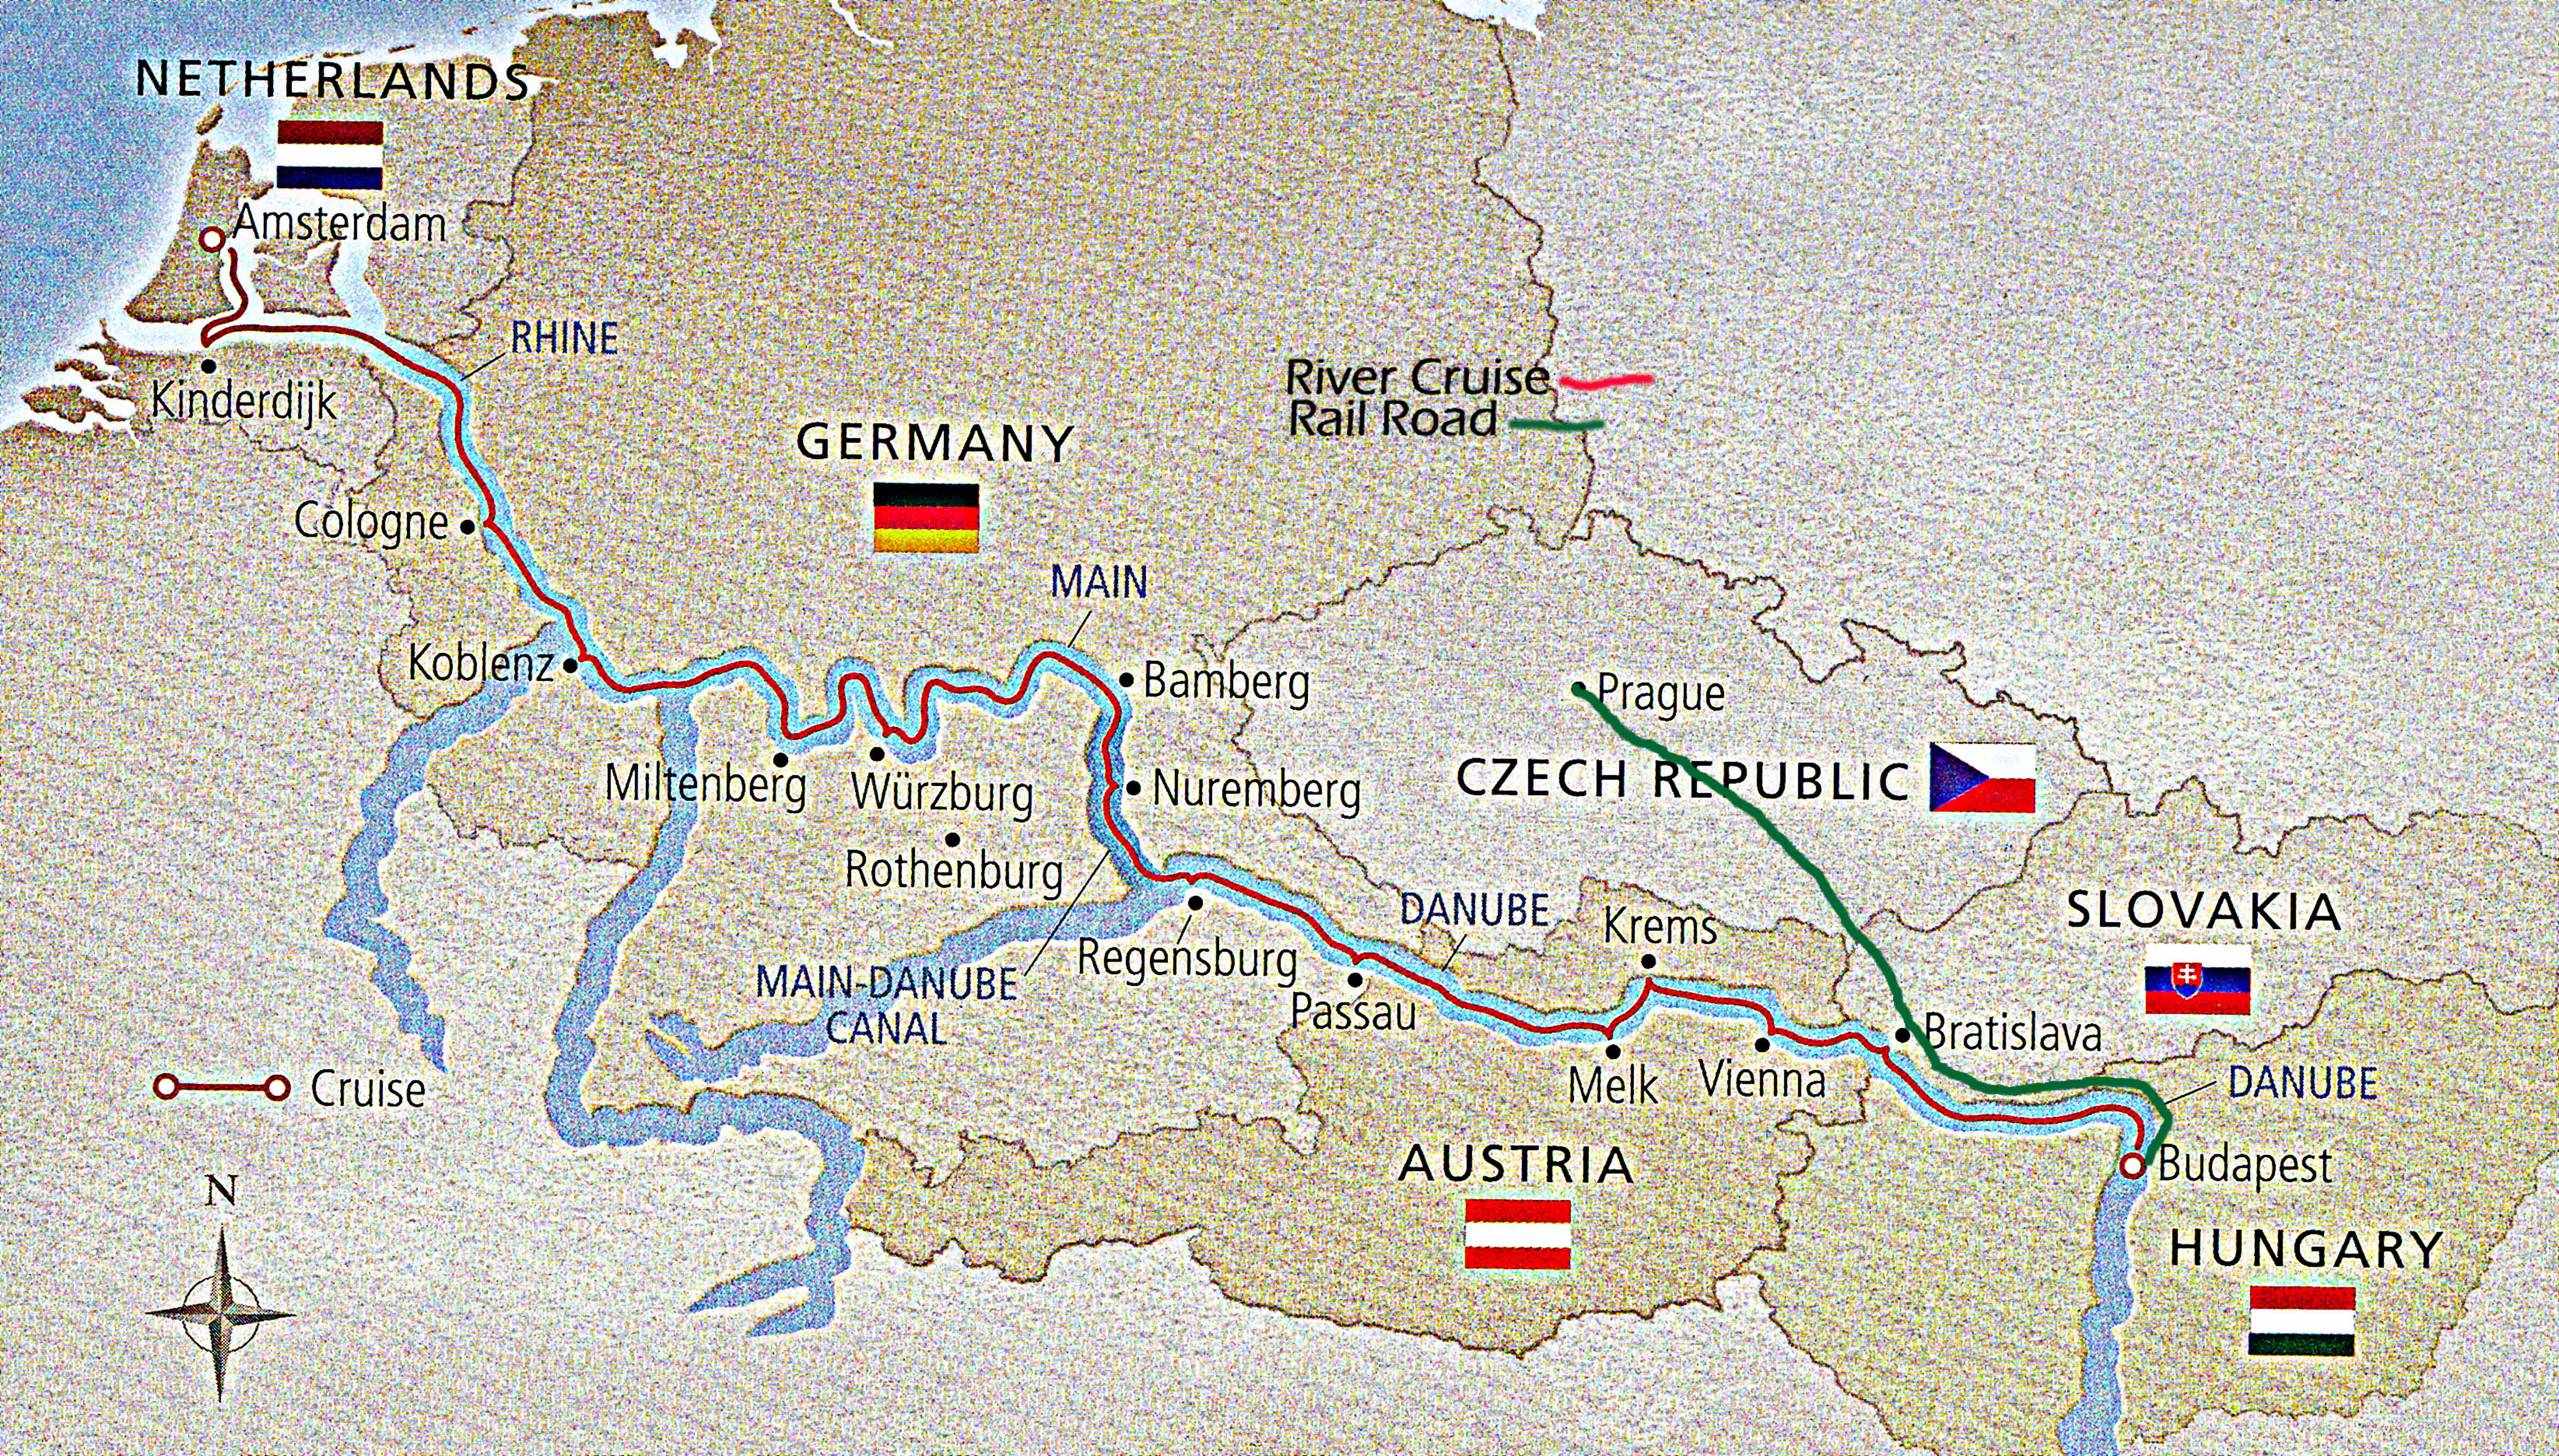 Europe2014/map-1.jpg